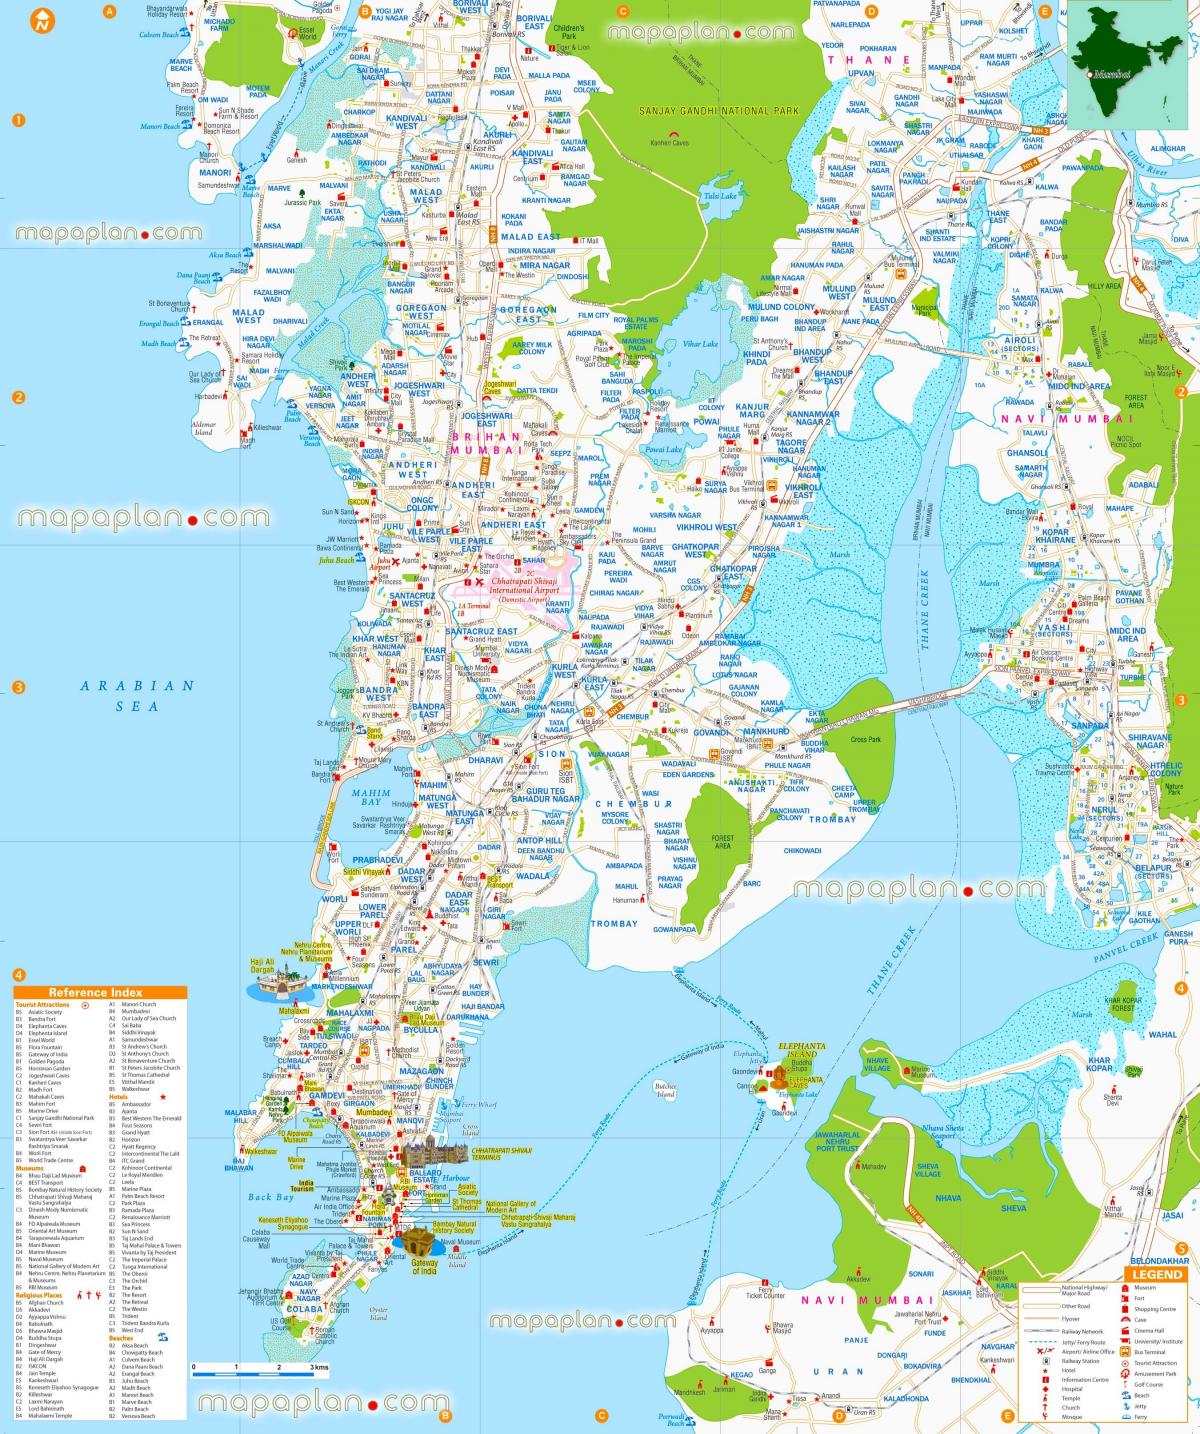 Mumbai - Bombay sightseeing map